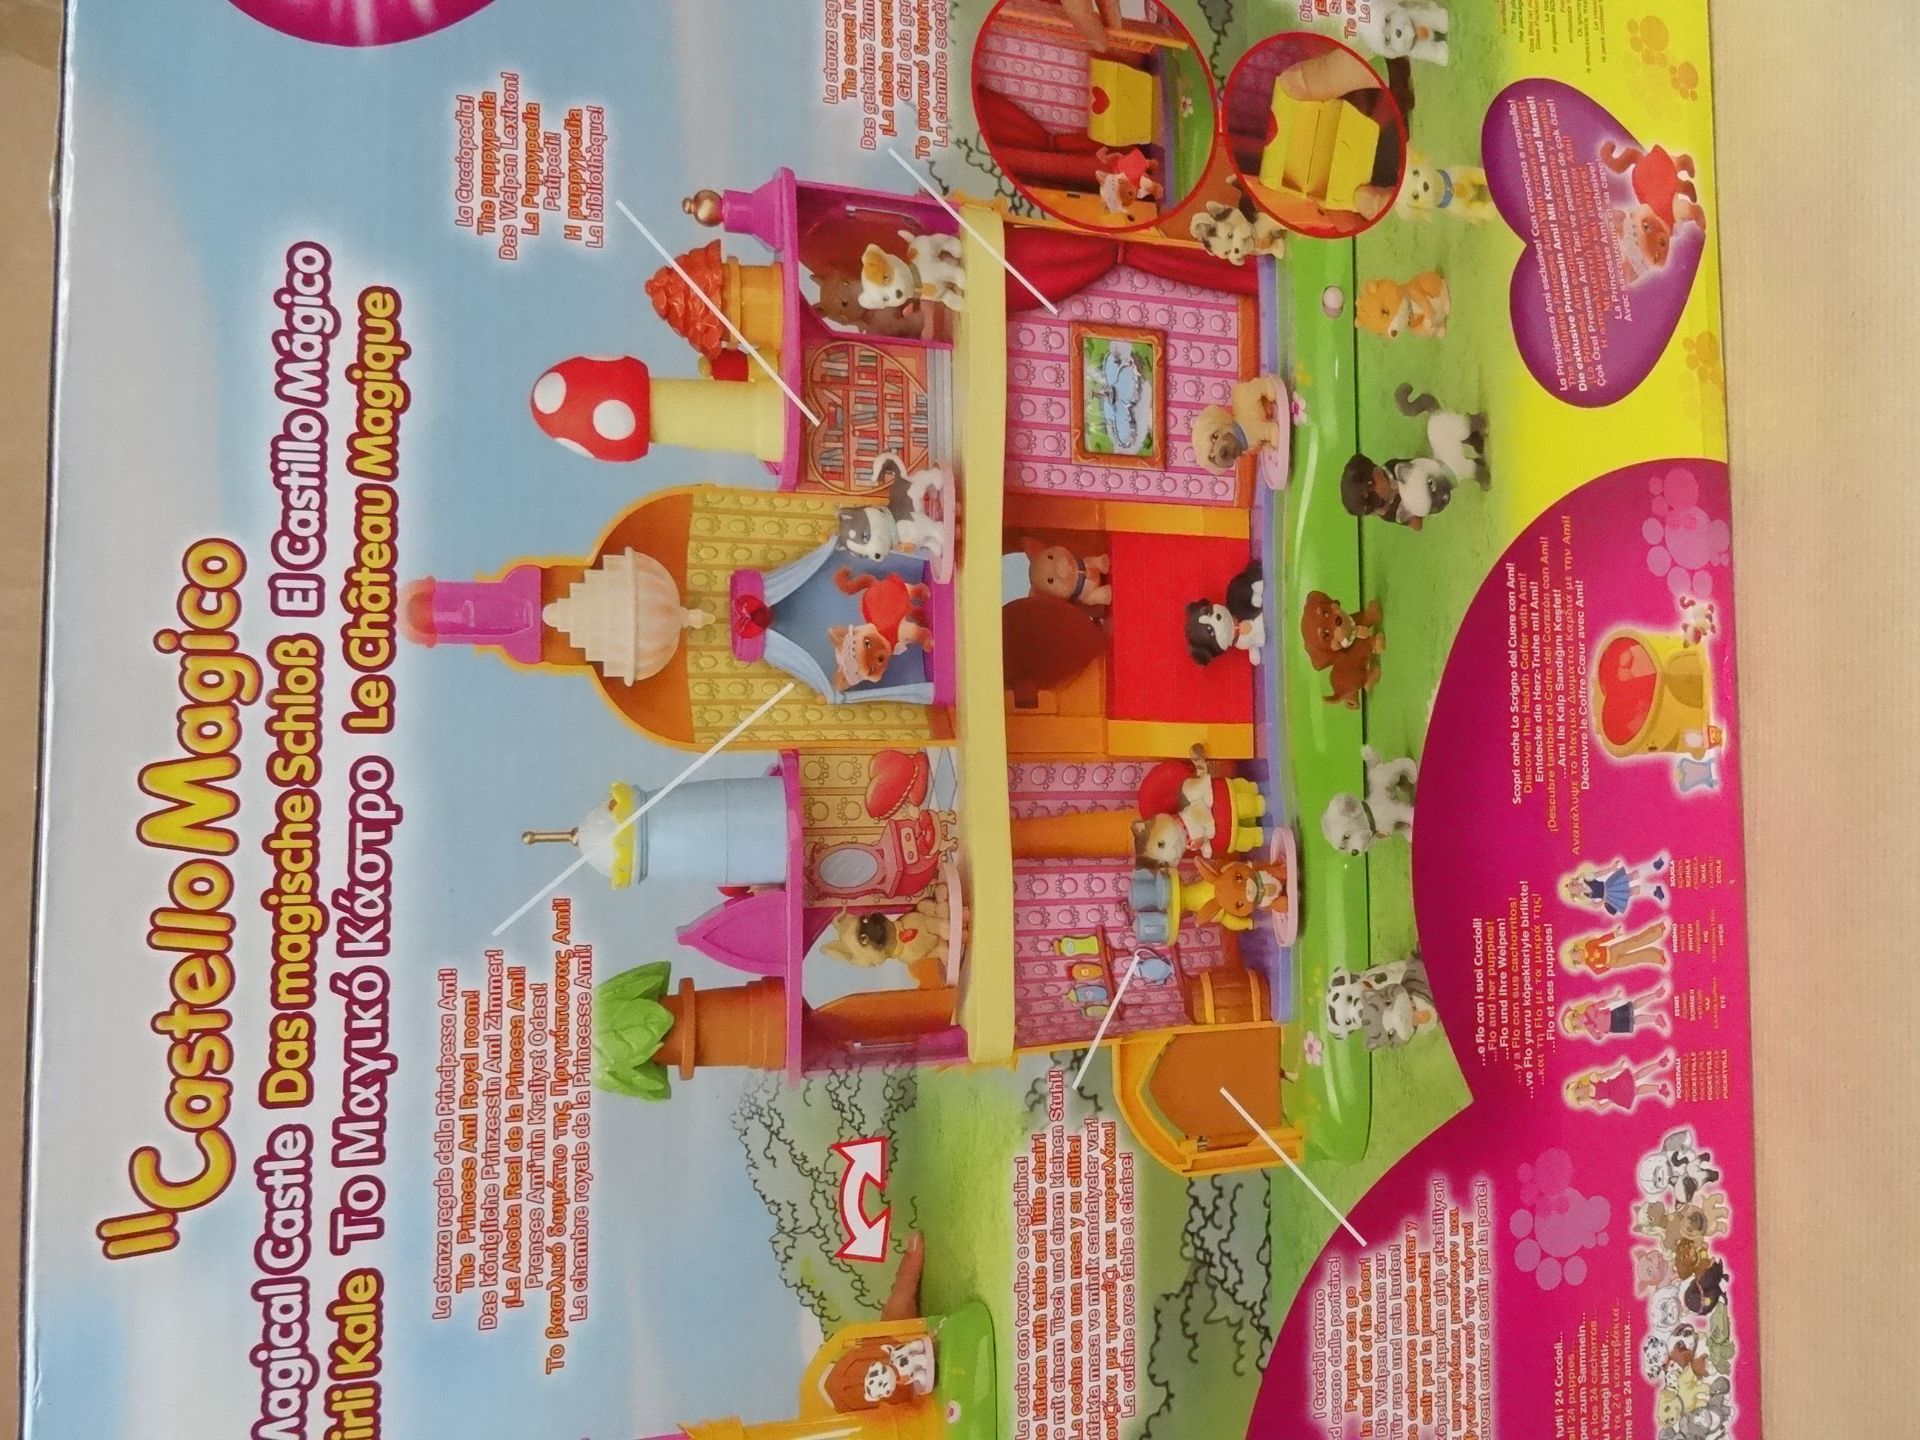 4 x Cuccili Cerca Amici Castle Magico Large Kids Play set castles! RRP £79.99 Each! Total RRP £319. - Image 4 of 4